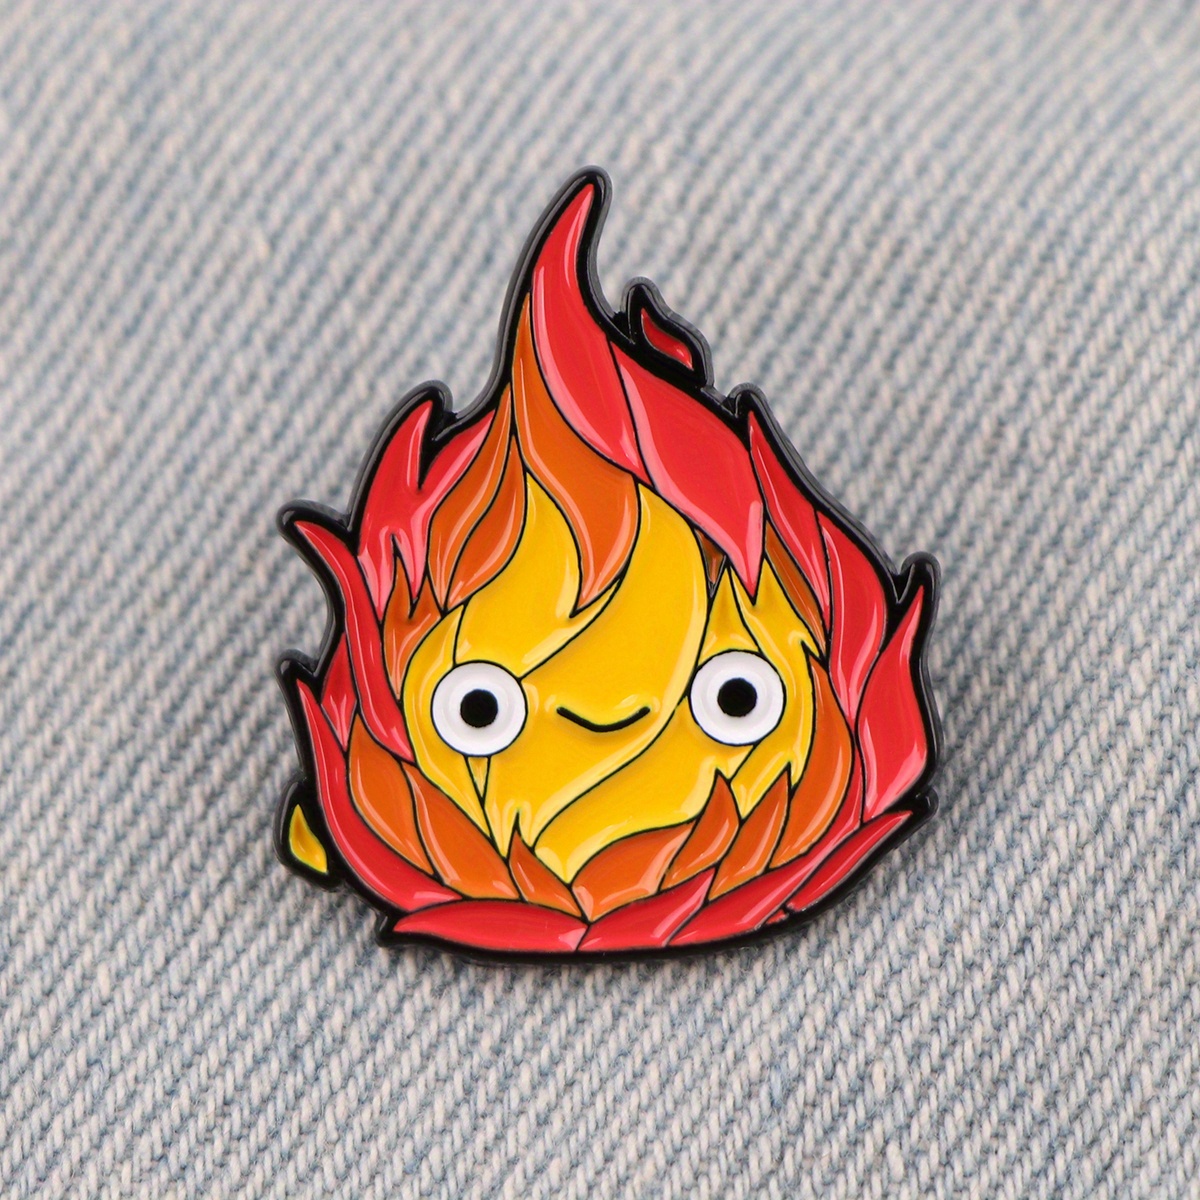 Medsor 5pcs Anime Pins Brooch Cute Glass Lapel Pins for Fans Cartoon Monster Pins Badge Backpacks Girl Boy Gift